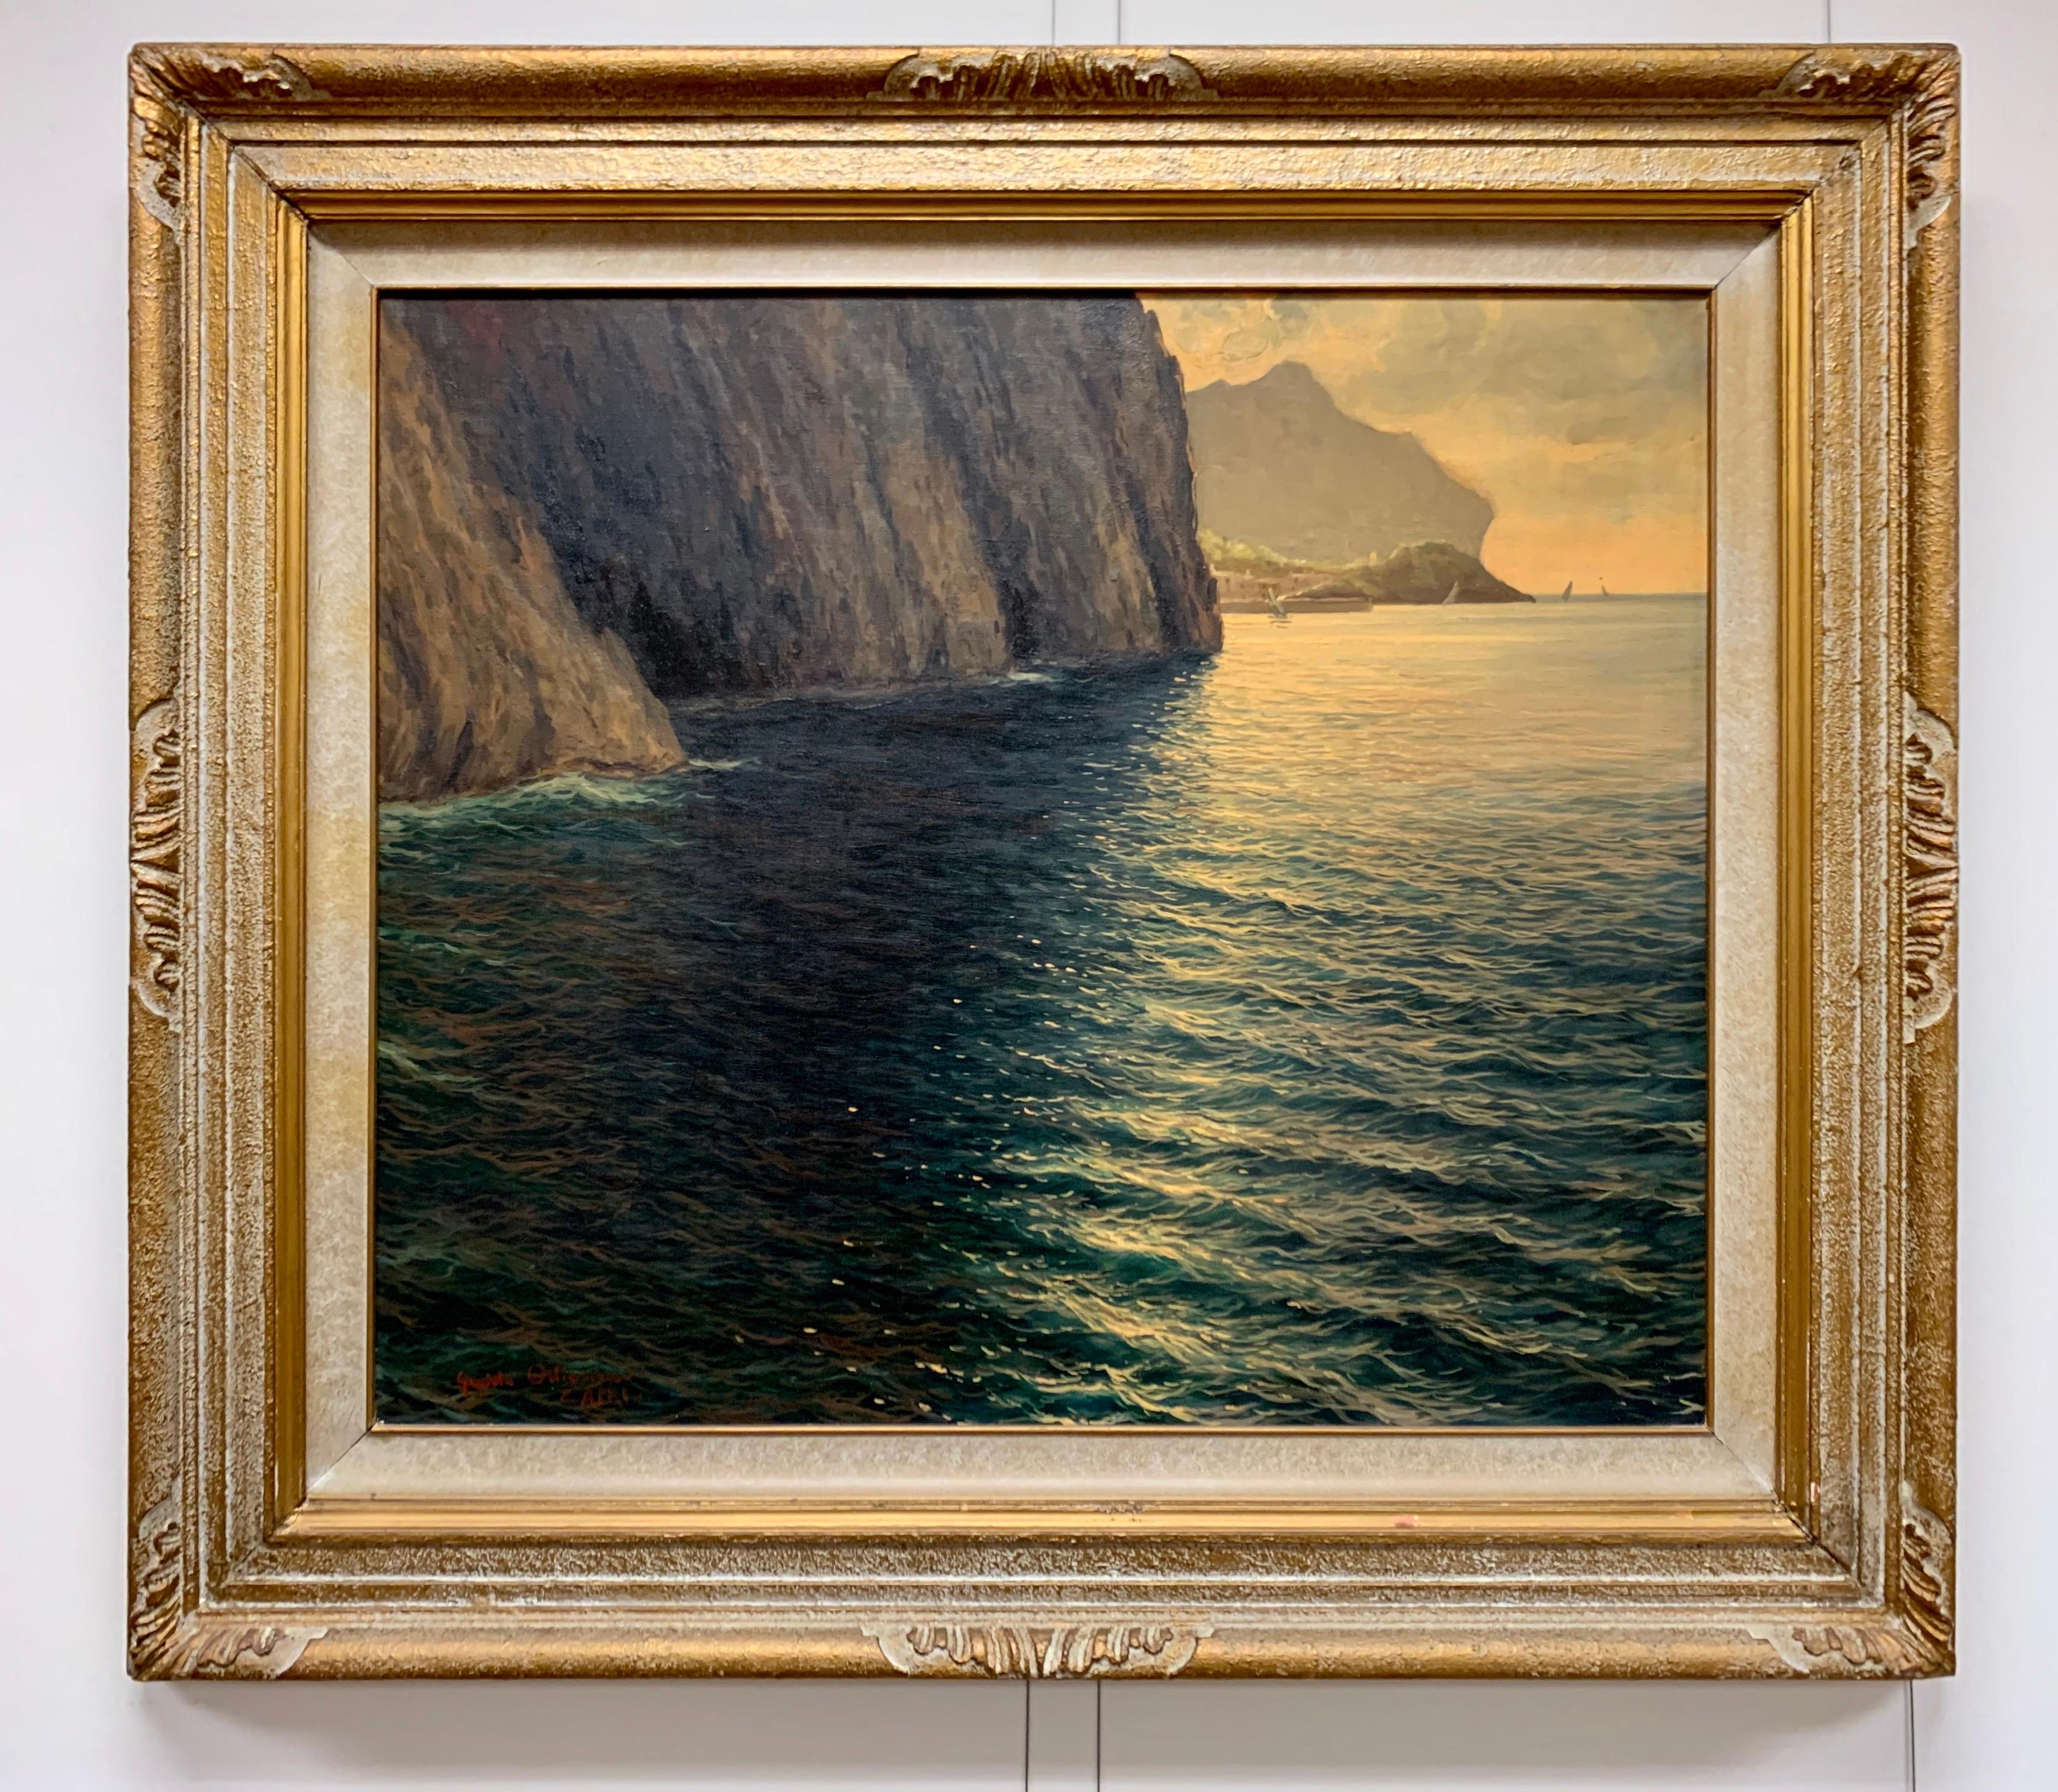 Original Signed Guido Odierna “Capri” Oil on Canvas Seascape 2